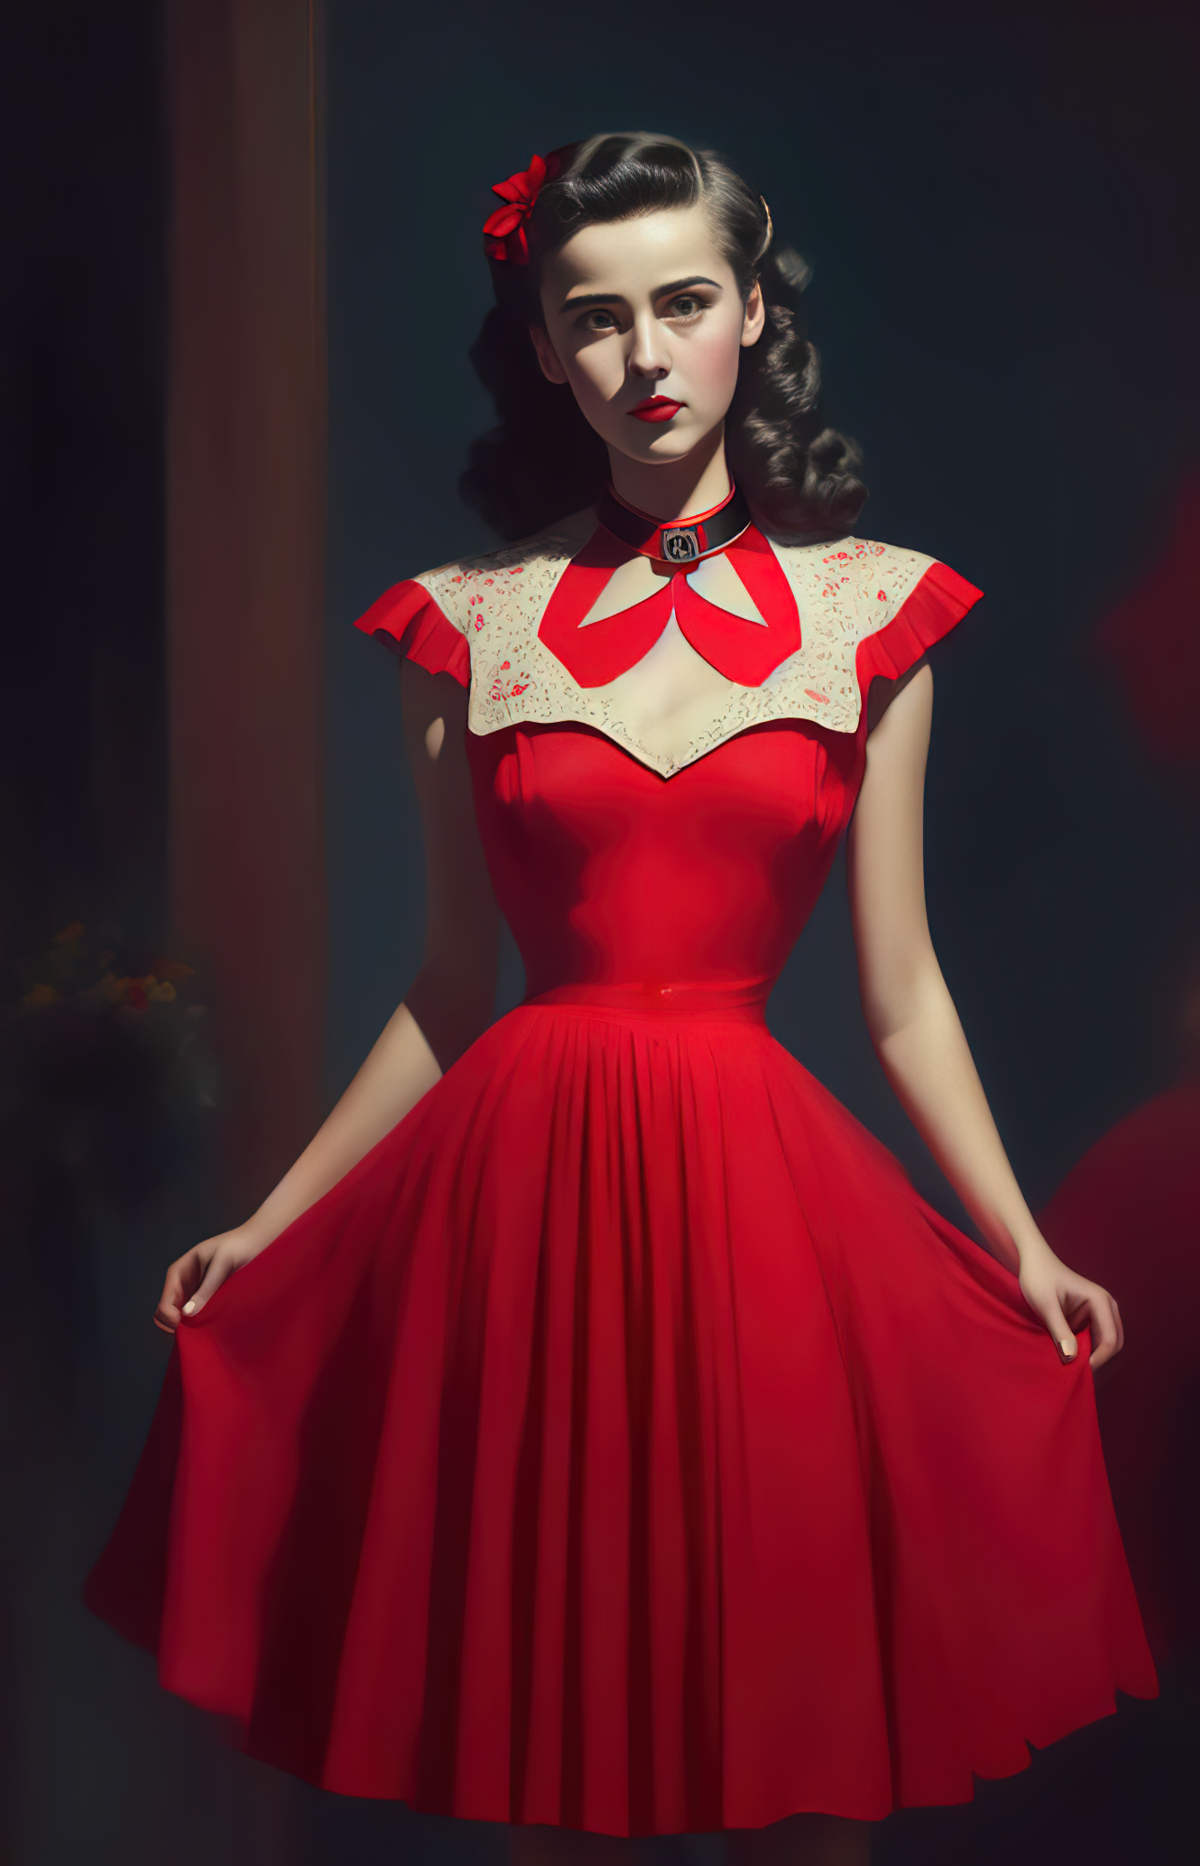 Red Dress Alice Munro Short Story